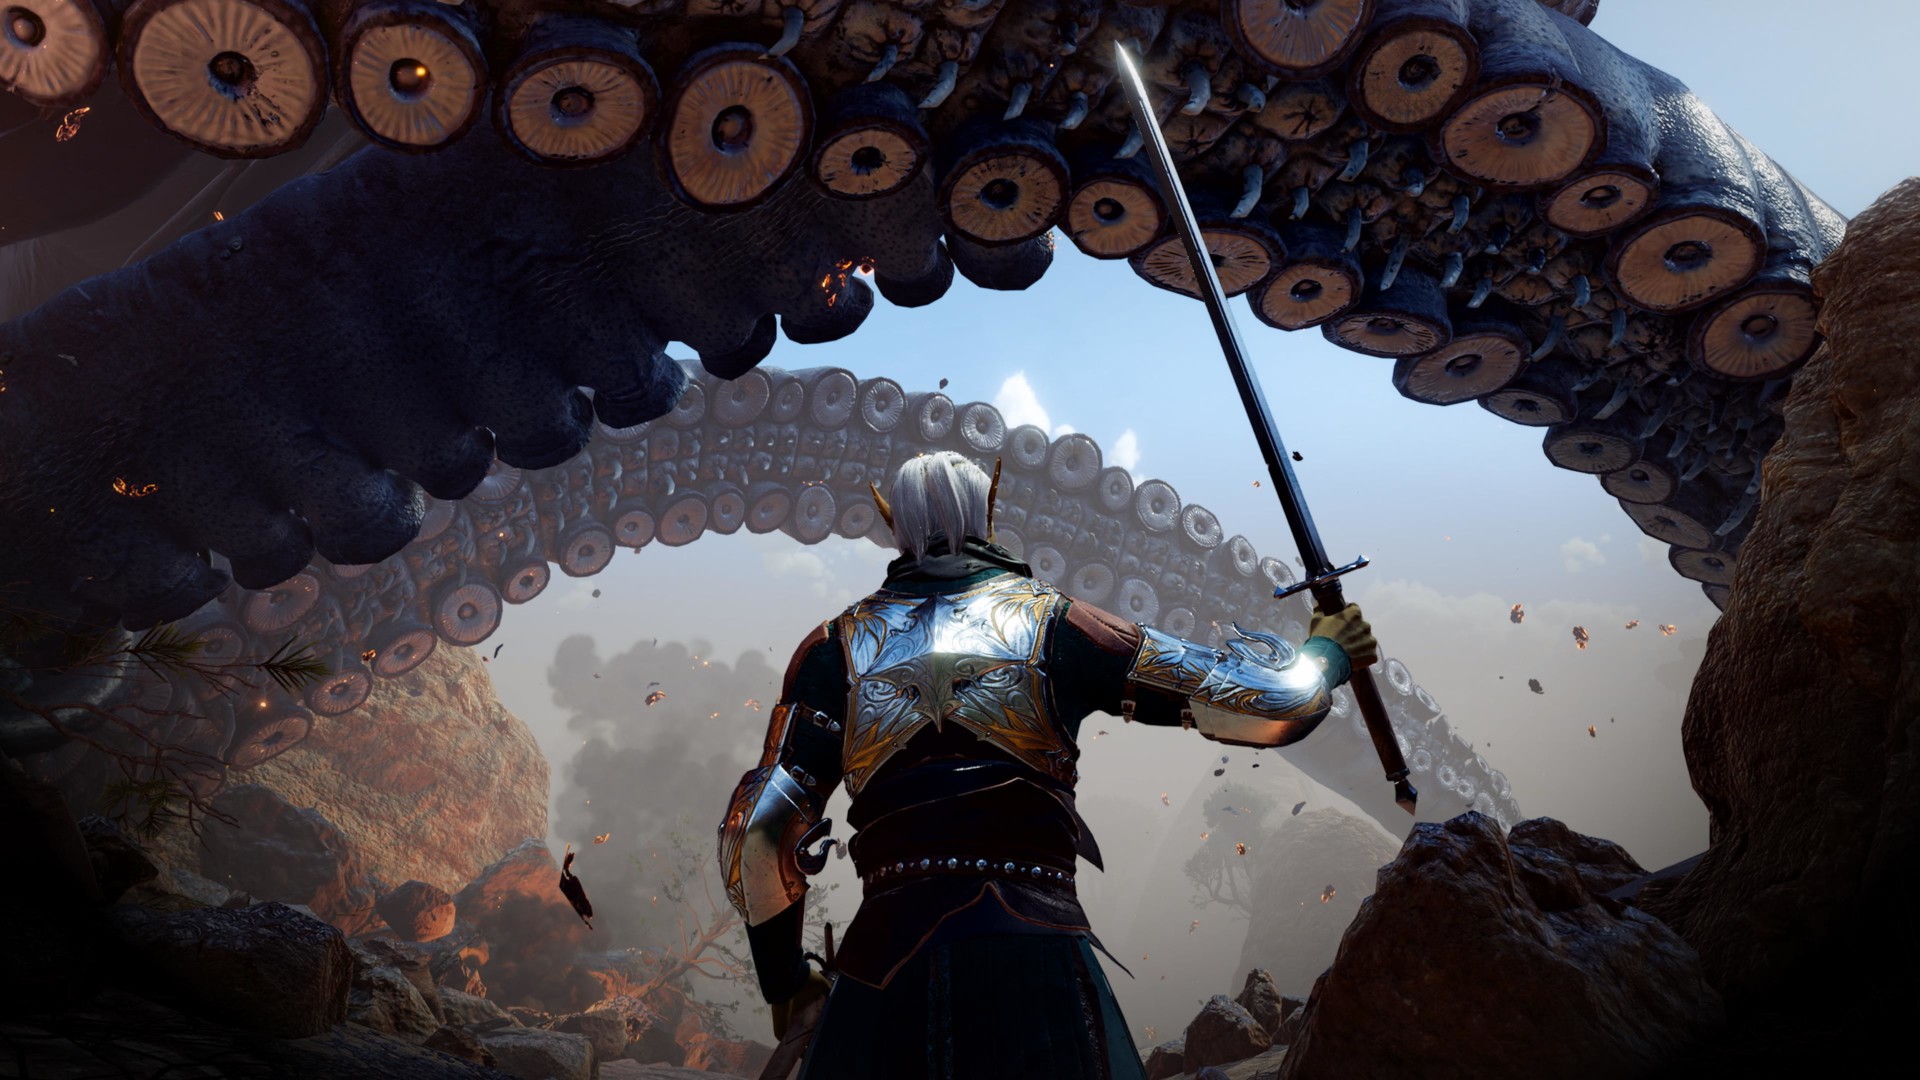 Dragon Age: Origins Updated Combat Impressions - GameSpot